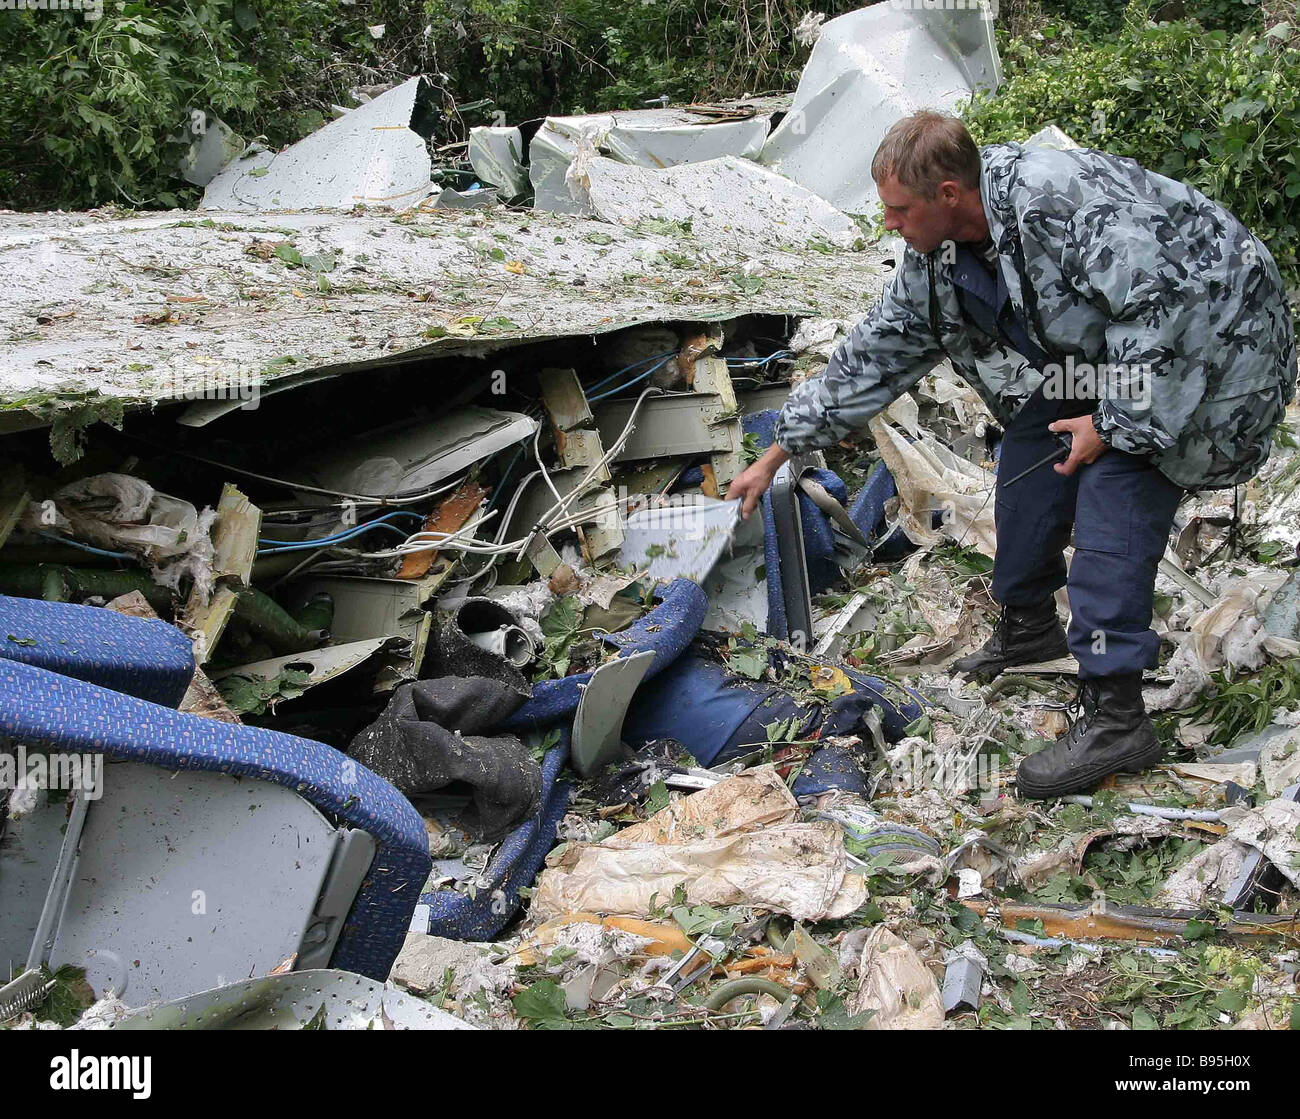 Авиакатастрофа ту 134. Катастрофа ту-134 в Иванове. Катастрофа ту-154 над Боденским озером. 24 Августа 2004 авиакатастрофа.